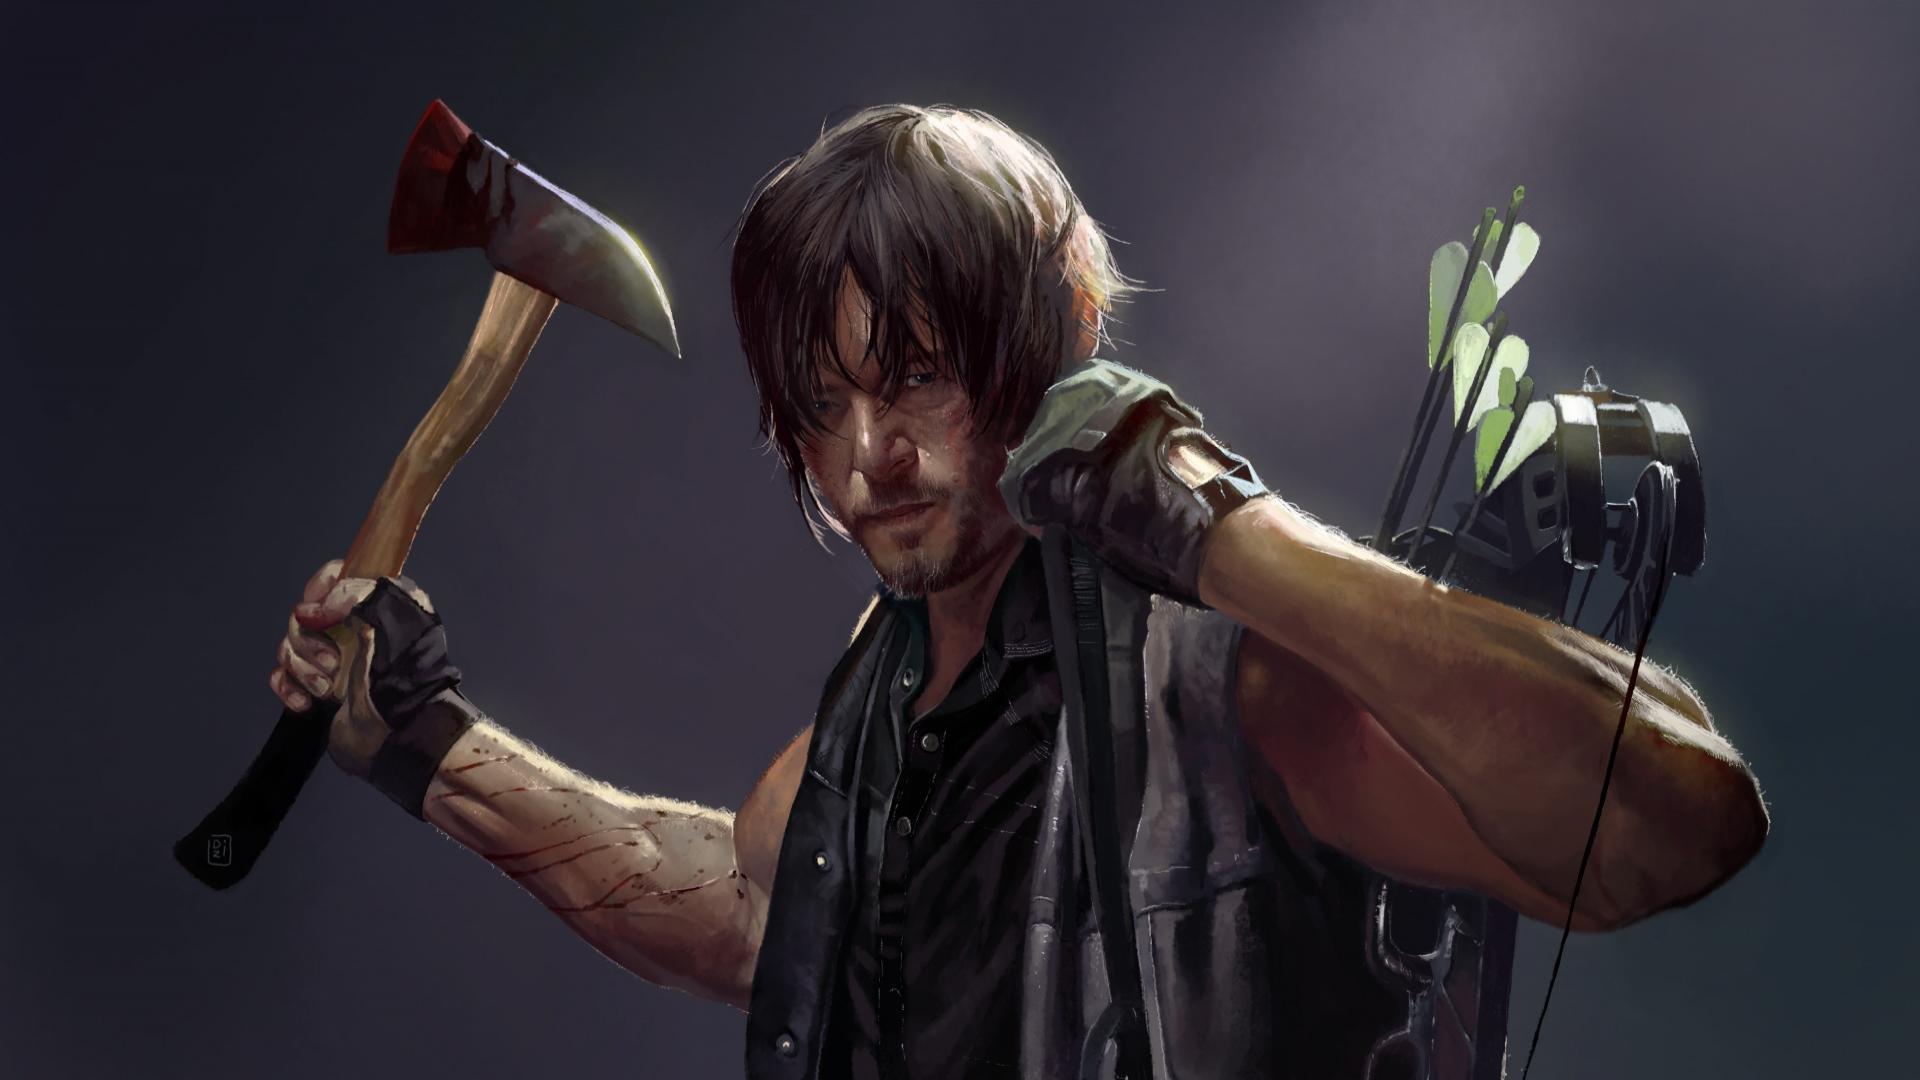 Walking Dead Daryl Wallpapers Top Free Walking Dead Daryl Backgrounds Wallpaperaccess